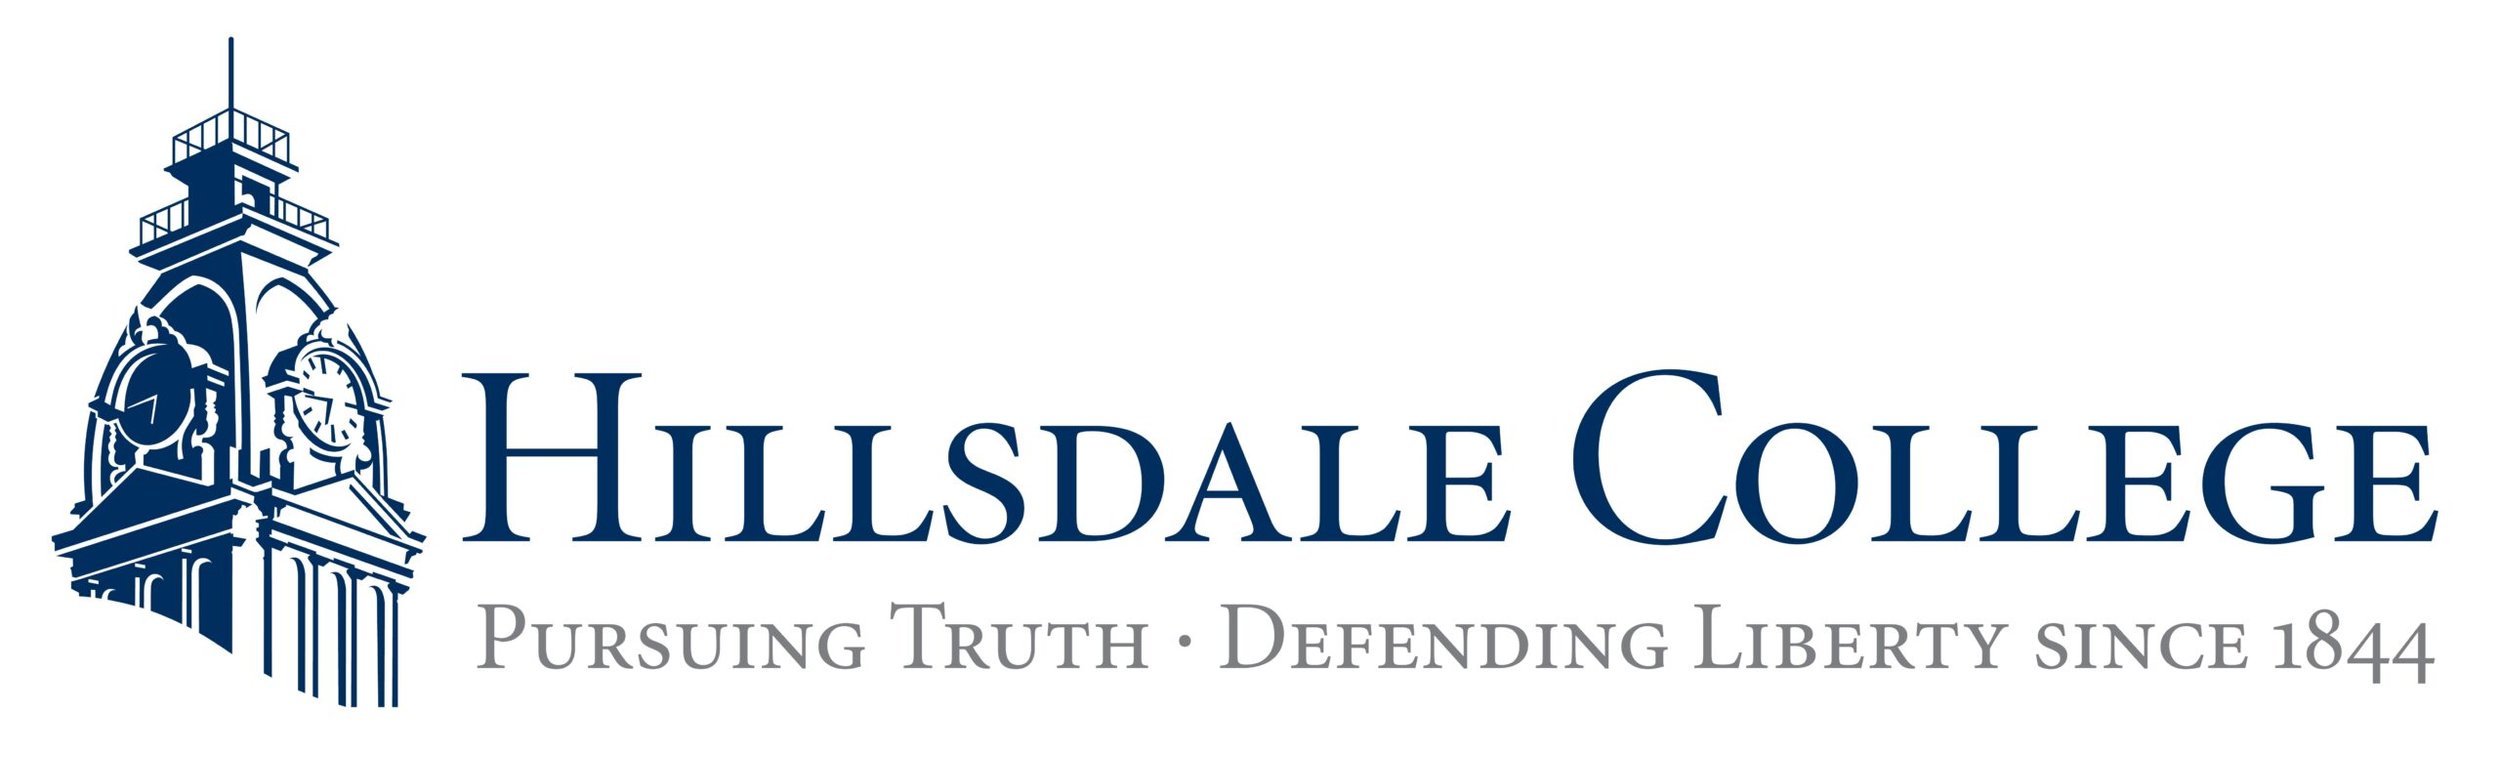 Hillsdale-College-clocktower-logo-Horizontal.jpg